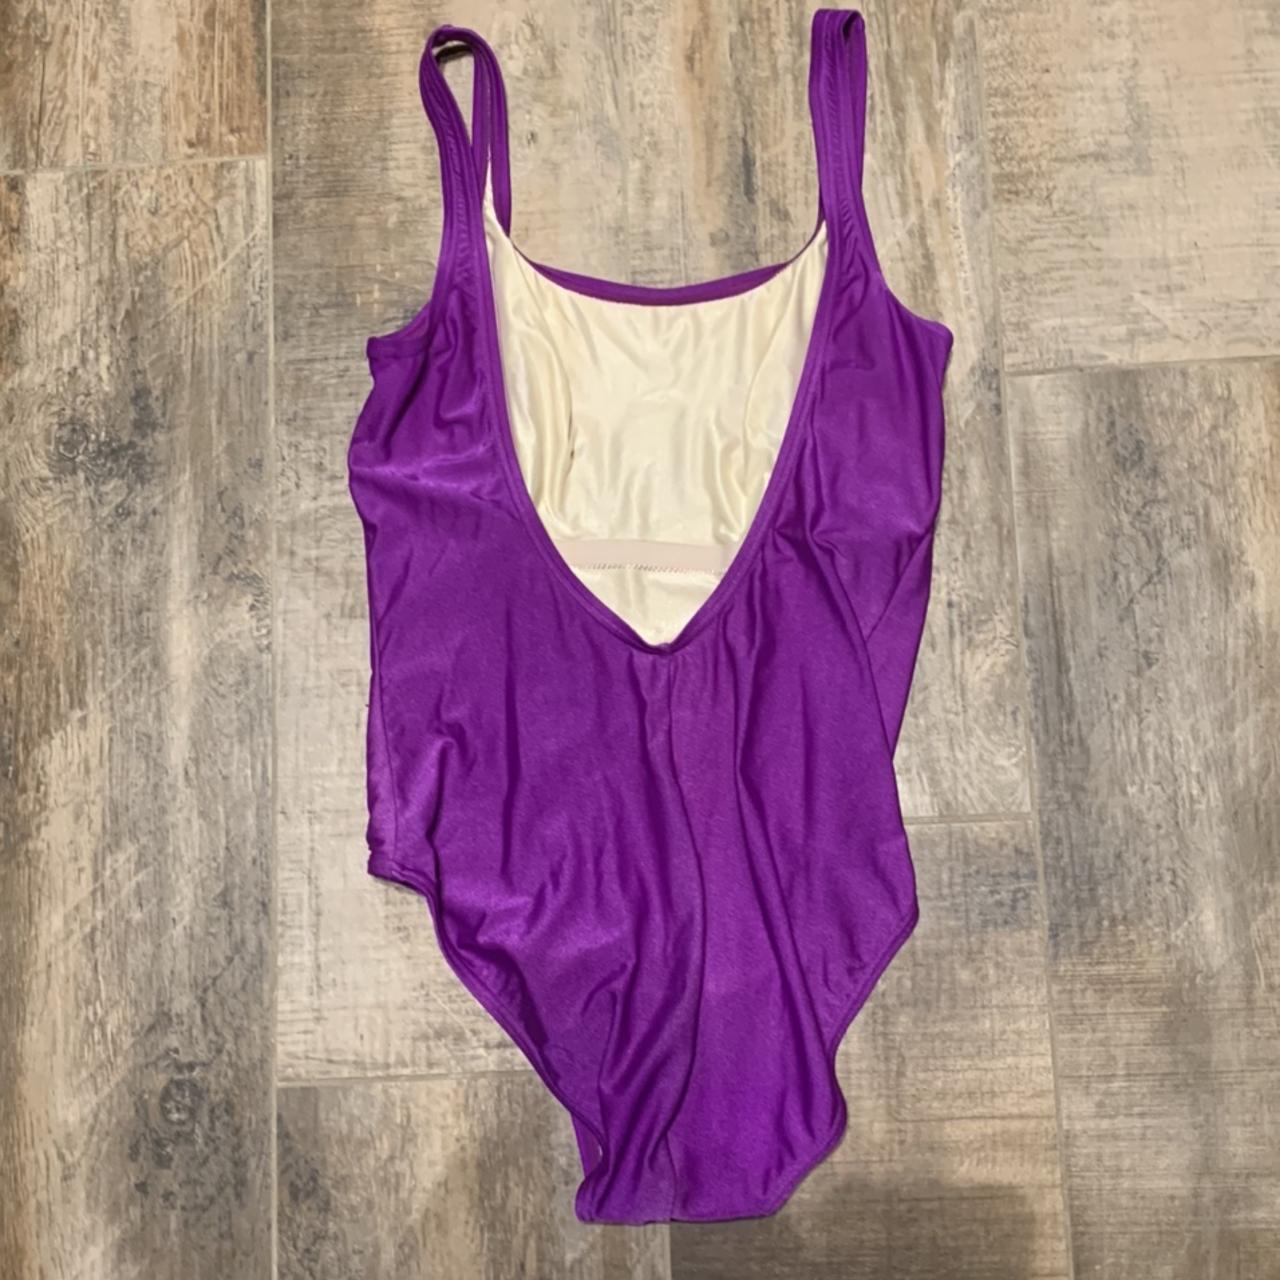 Speedo purple one piece swimming suit No size... - Depop